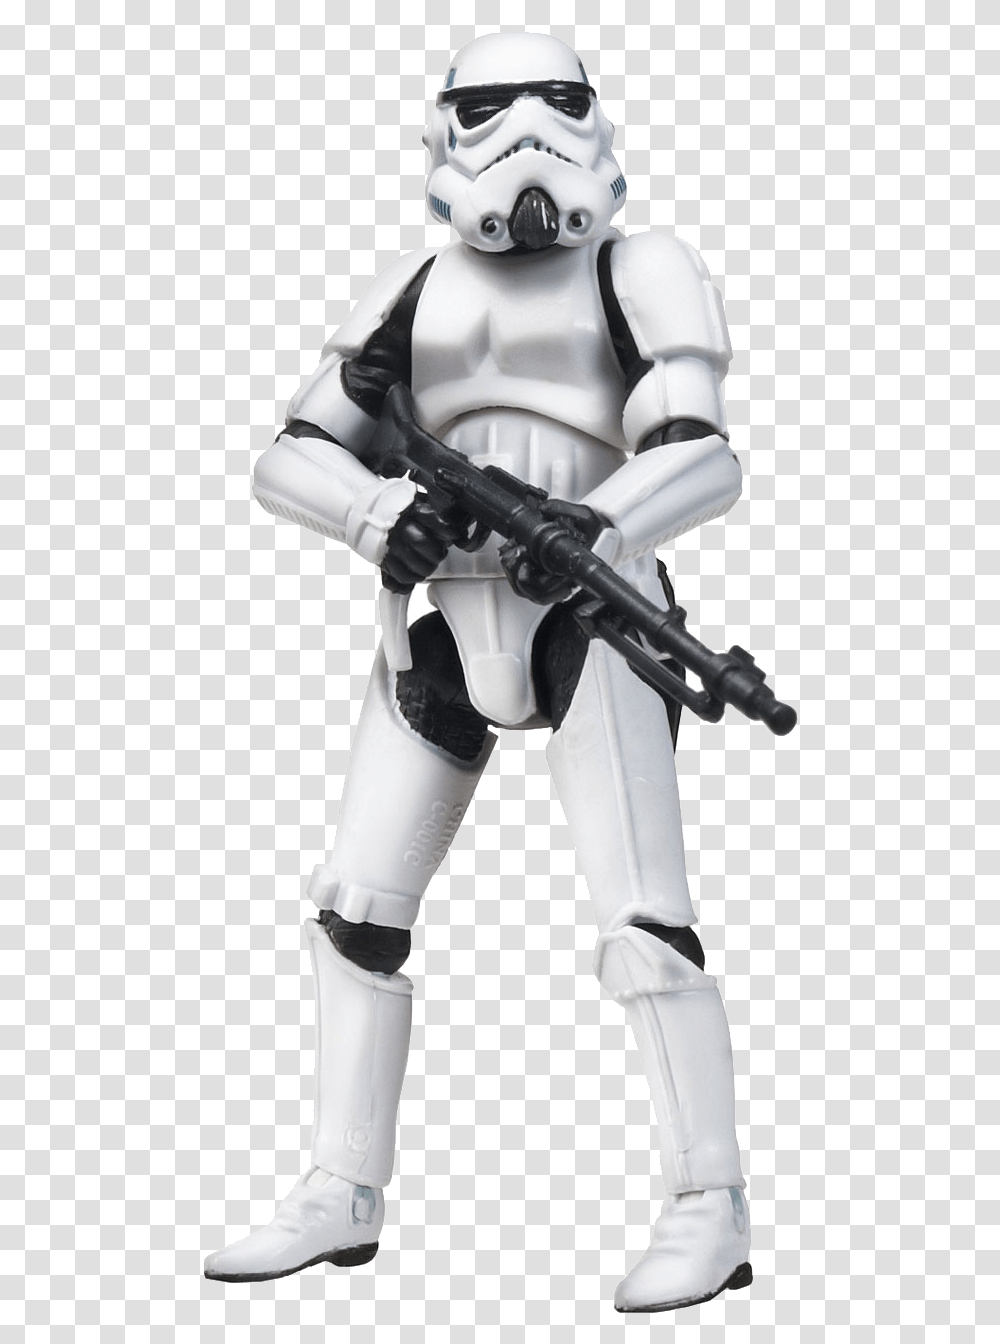 Stormtrooper Image With Images Vintage Star Wars Stormtrooper, Person, Human, Robot, Figurine Transparent Png